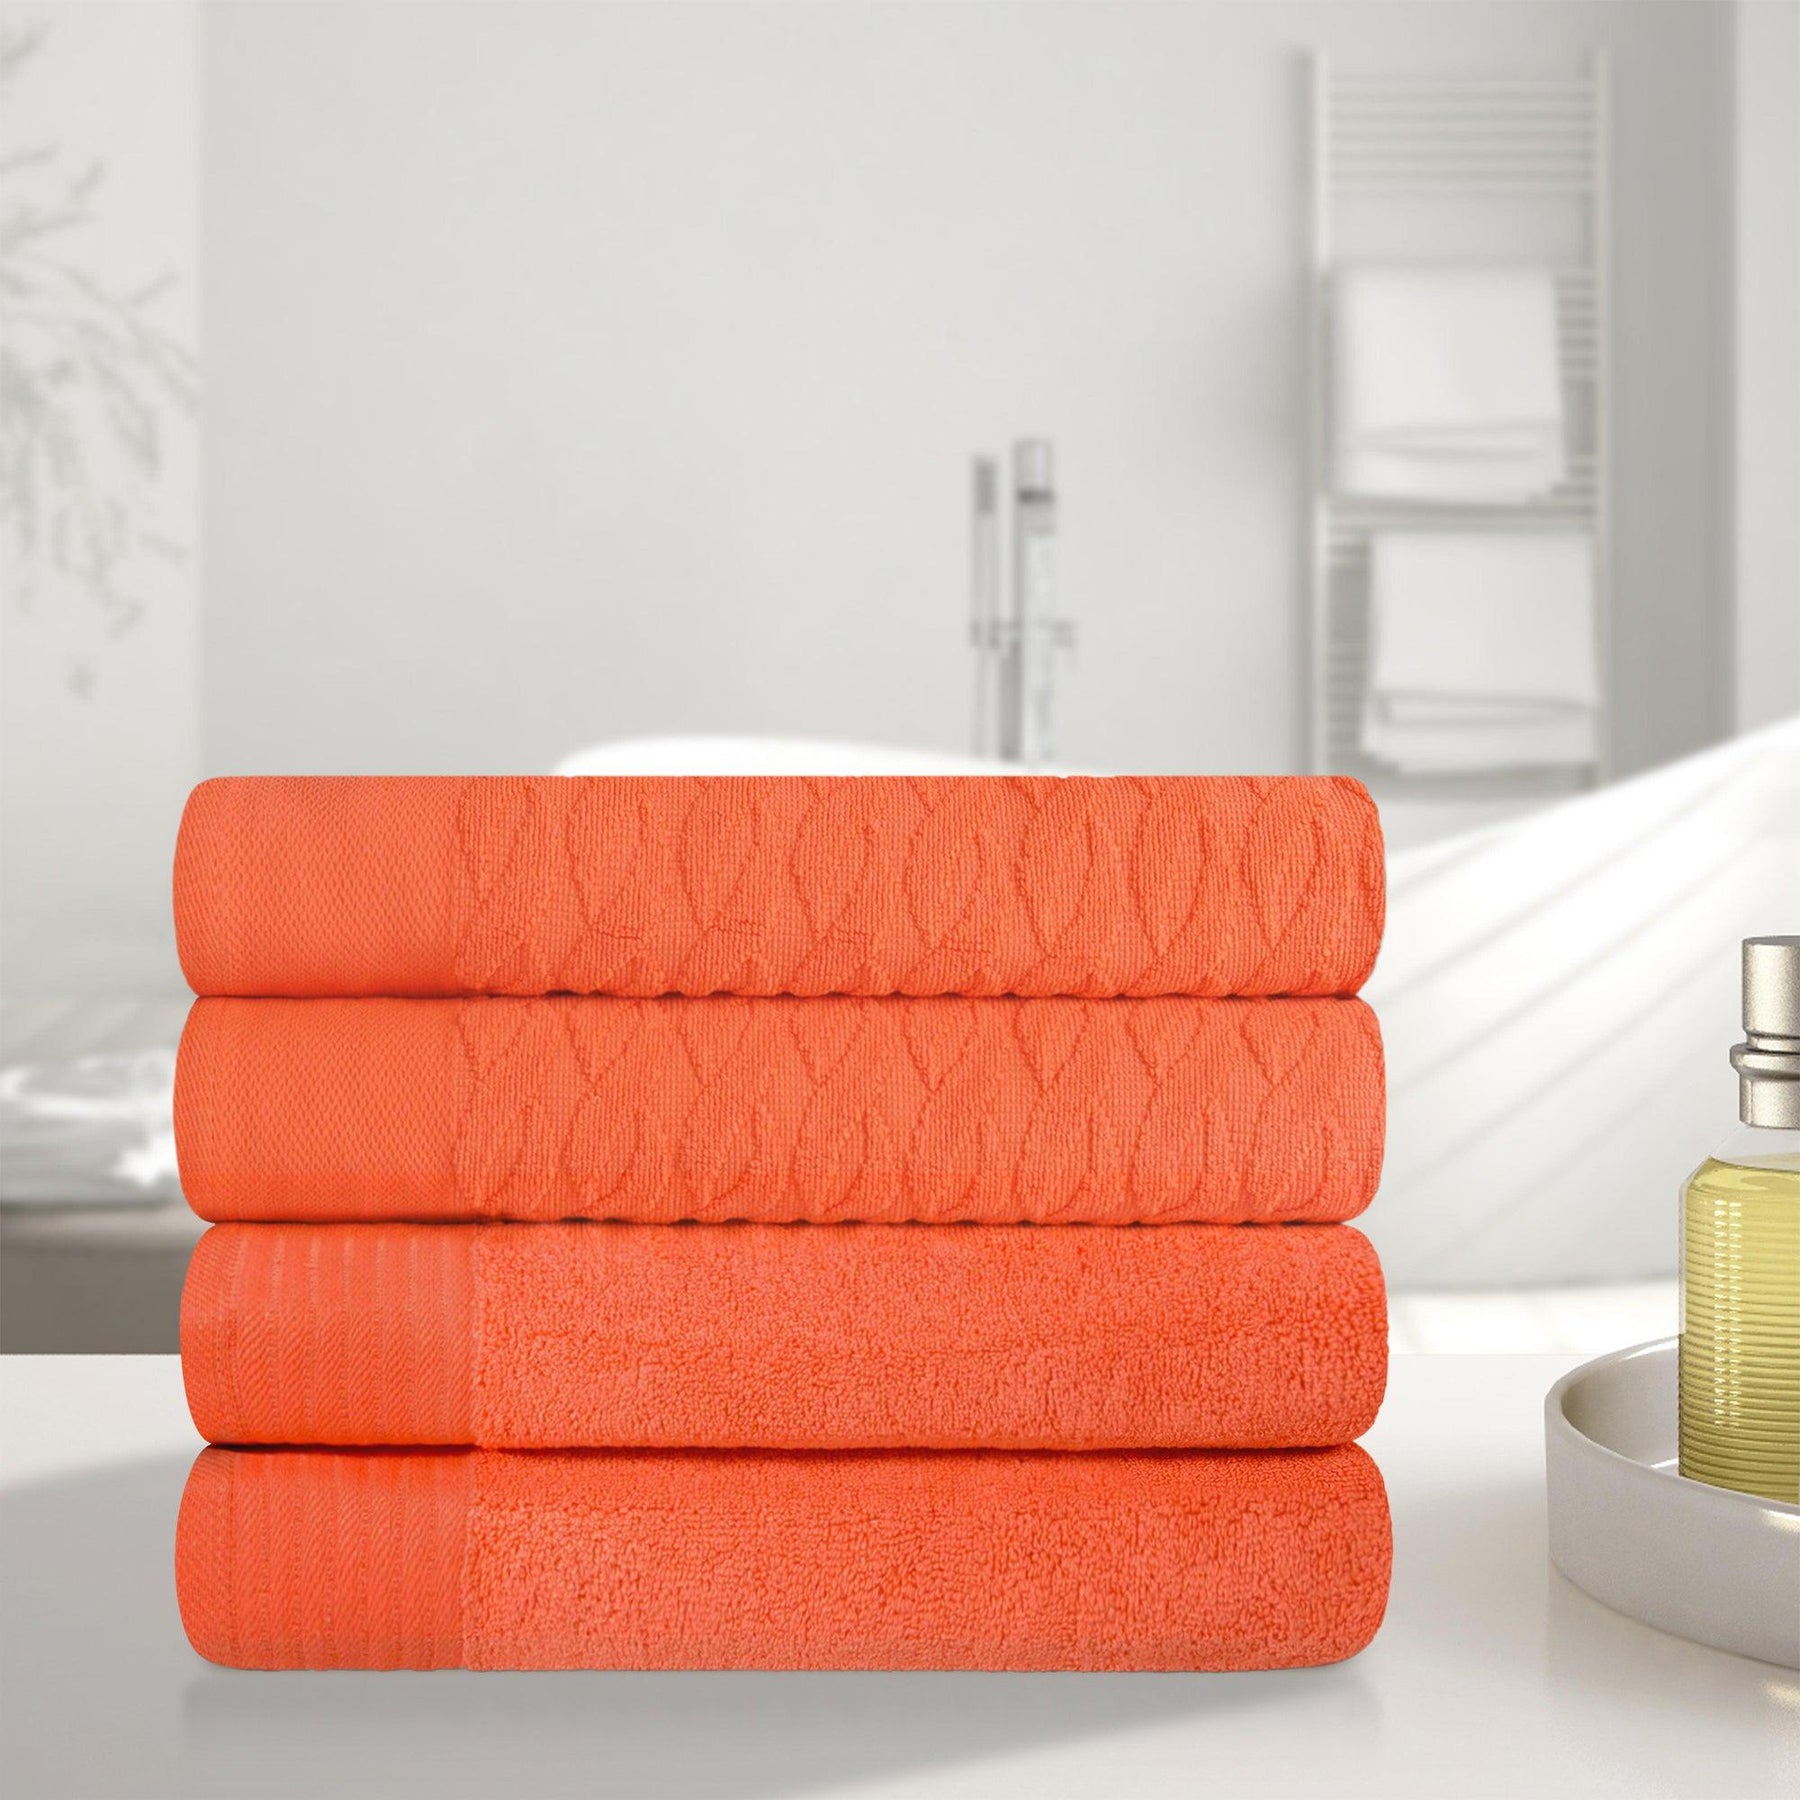 Premium Turkish Cotton Jacquard Herringbone and Solid 4-Piece Bath Towel Set - Emberglow